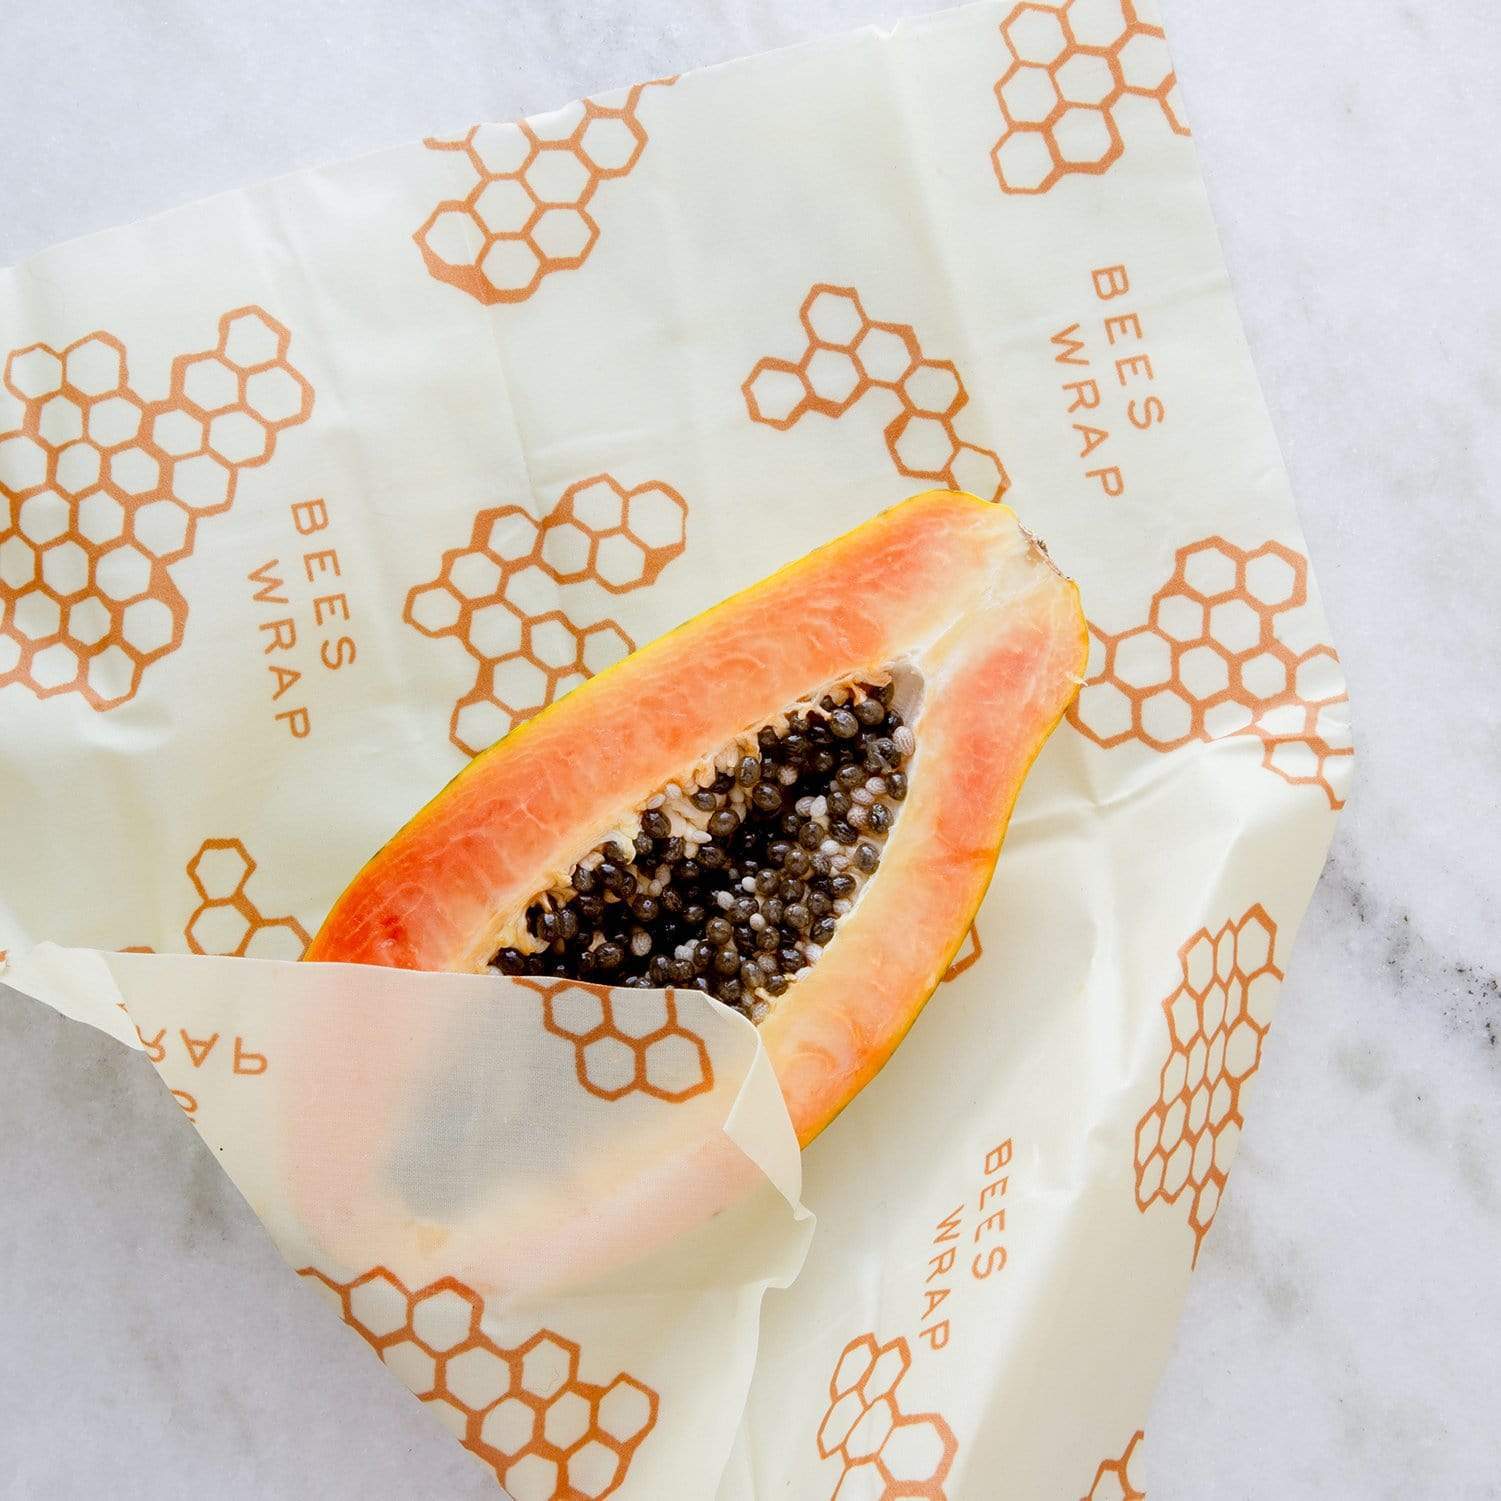 Honeysticks Triangular Crayons (10 Pack) - 100% Pure Beeswax, Food